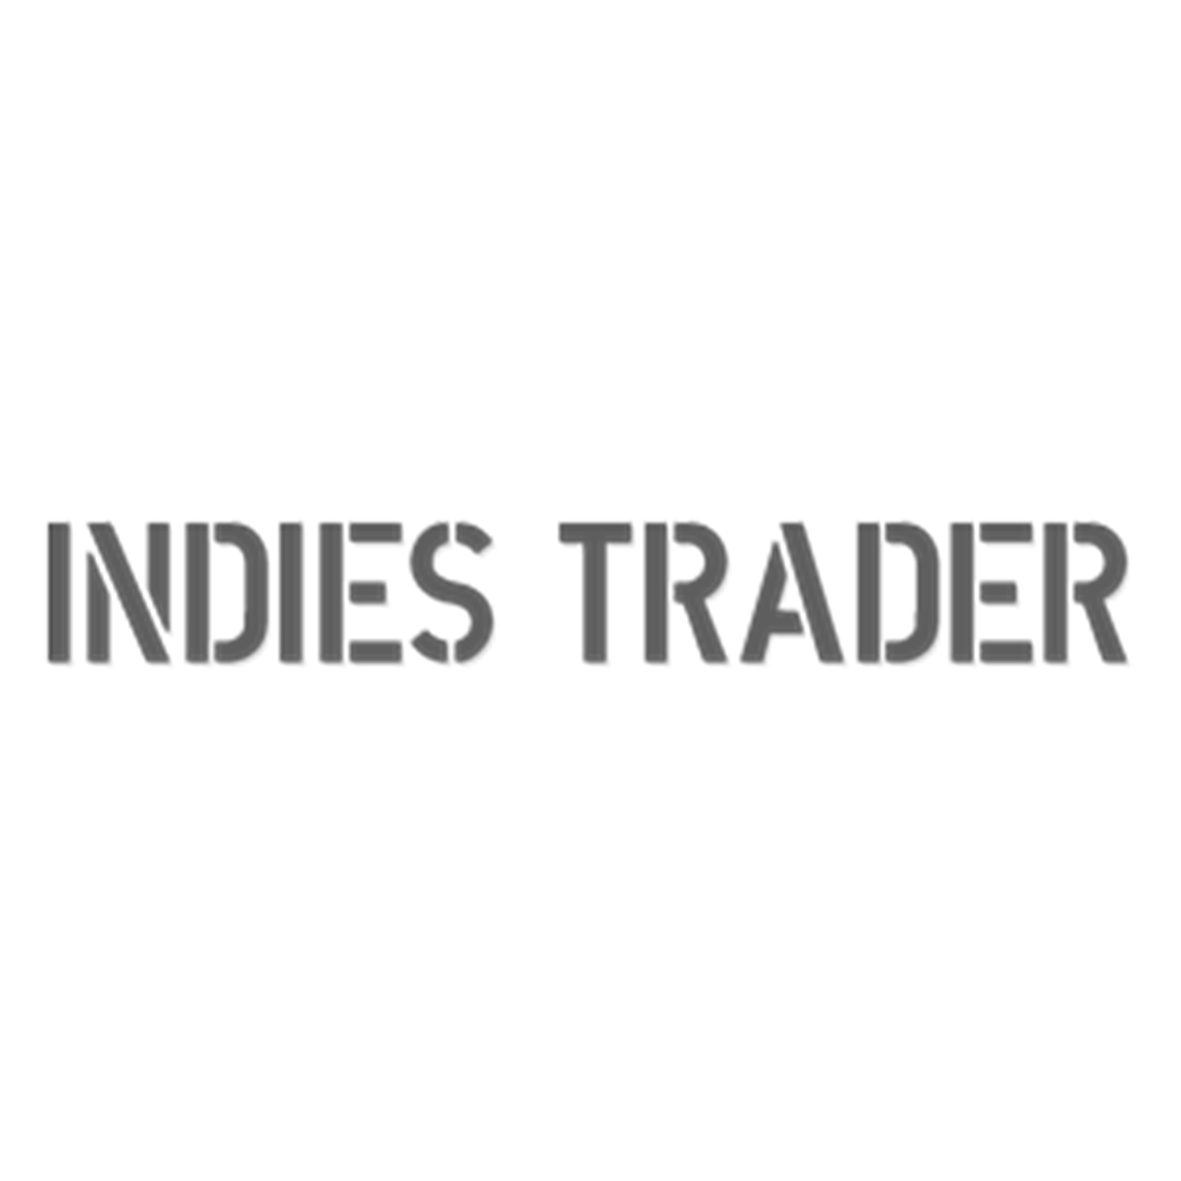 Indies Trader Logo.jpg